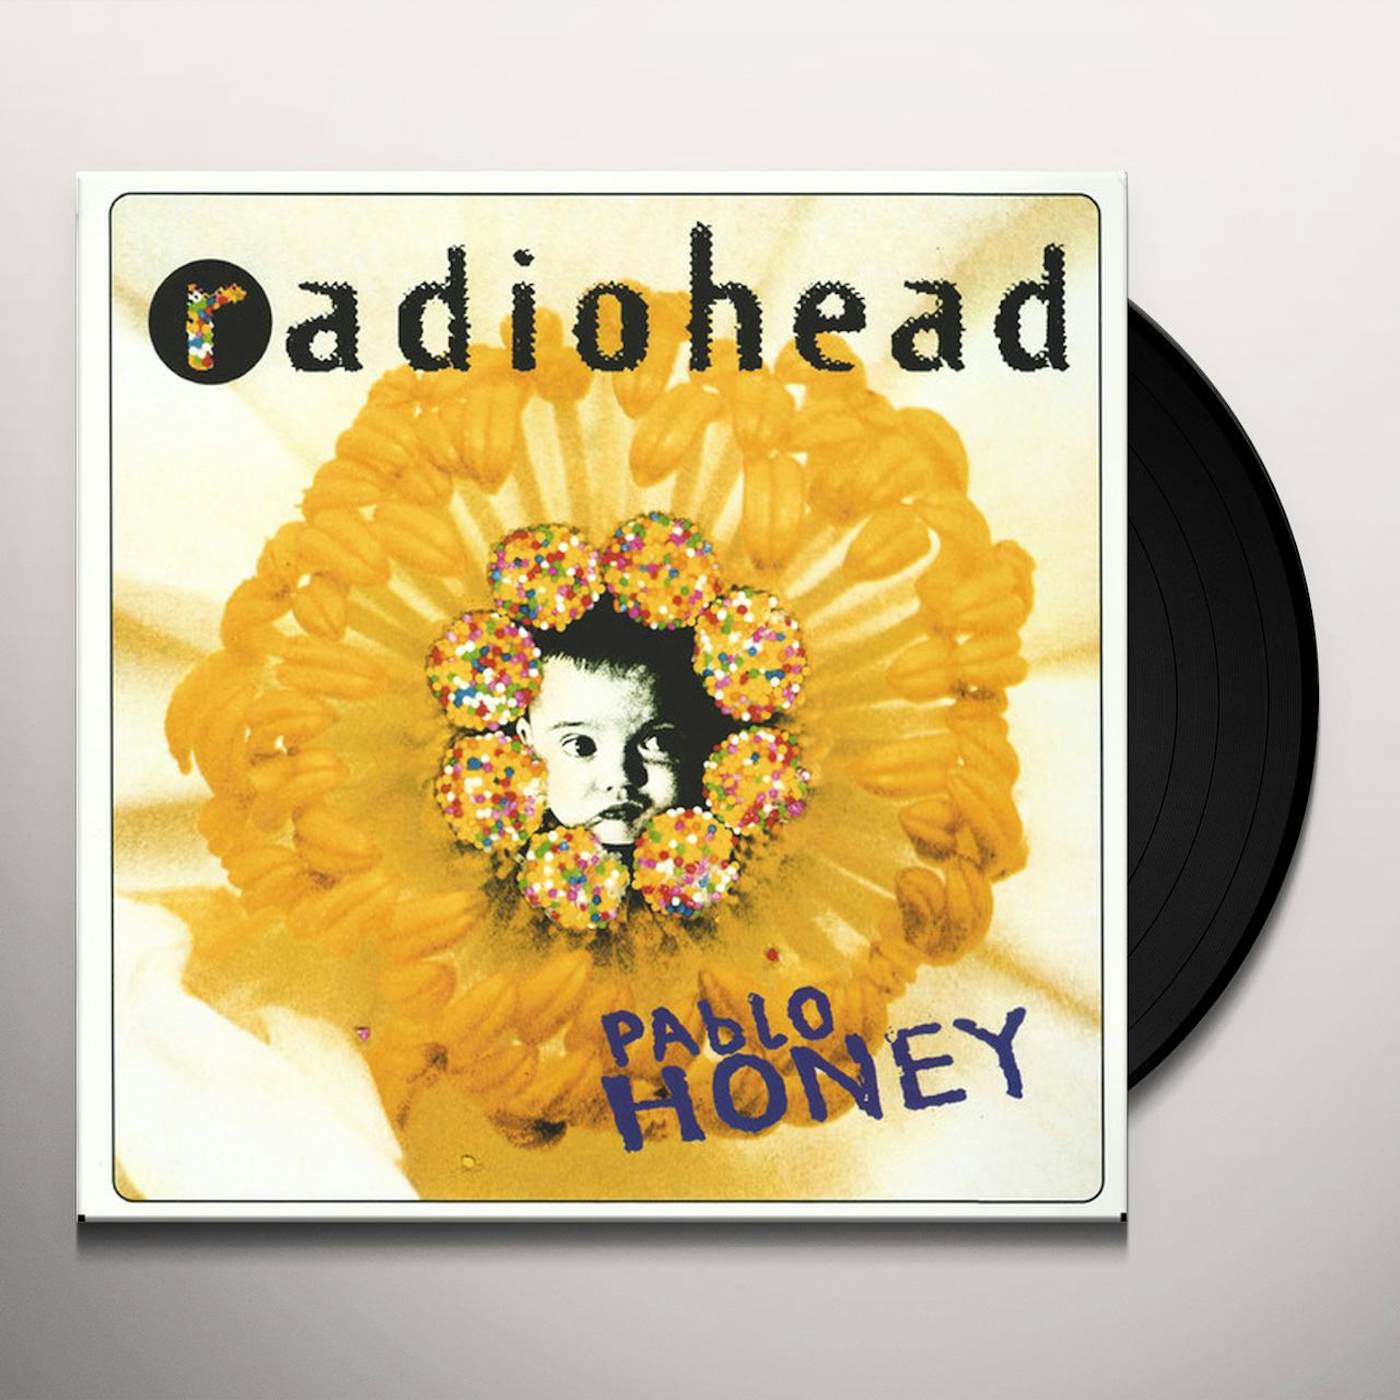 Radiohead - The Bends - Vinilo